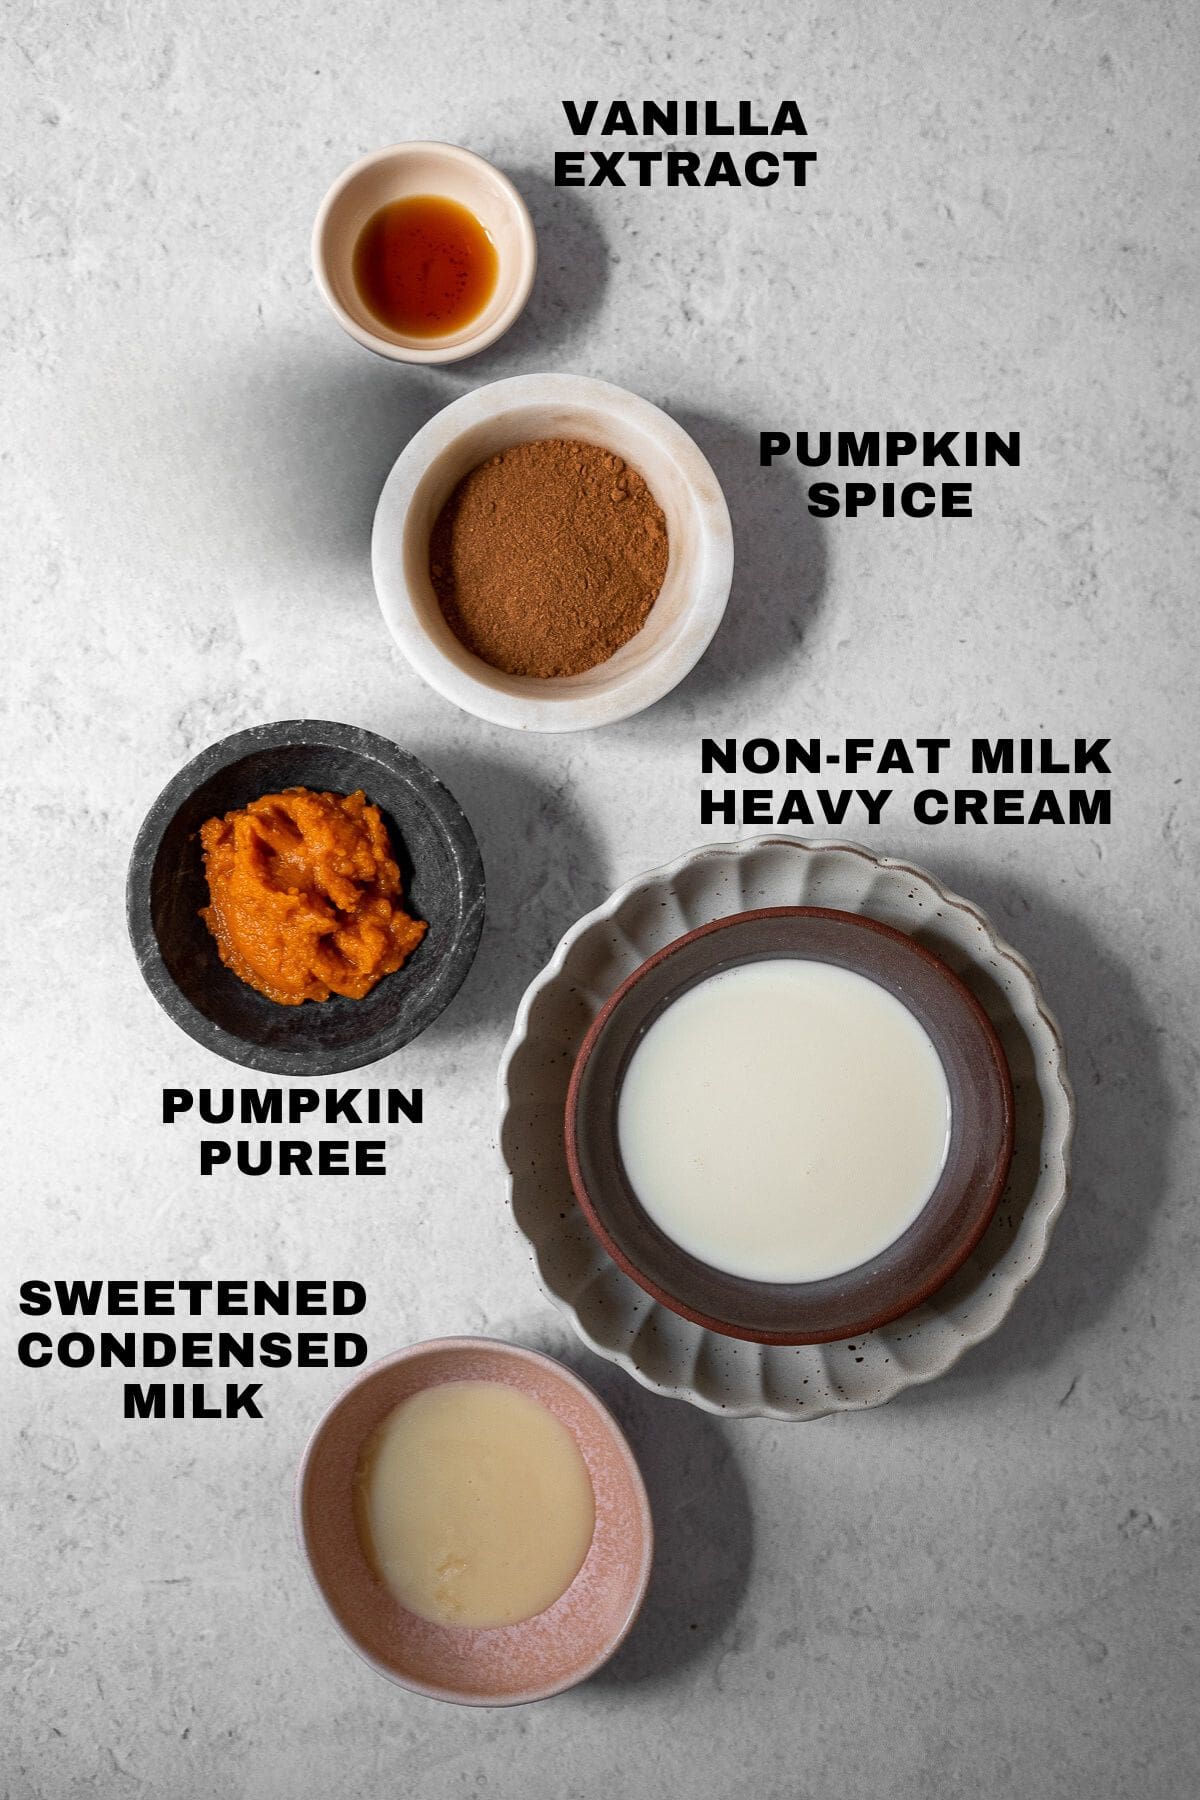 Vanilla extract, pumpkin spice, non-fat milk, heavy cream, pumpkin puree, sweetened condensed milk ingredients with labels.